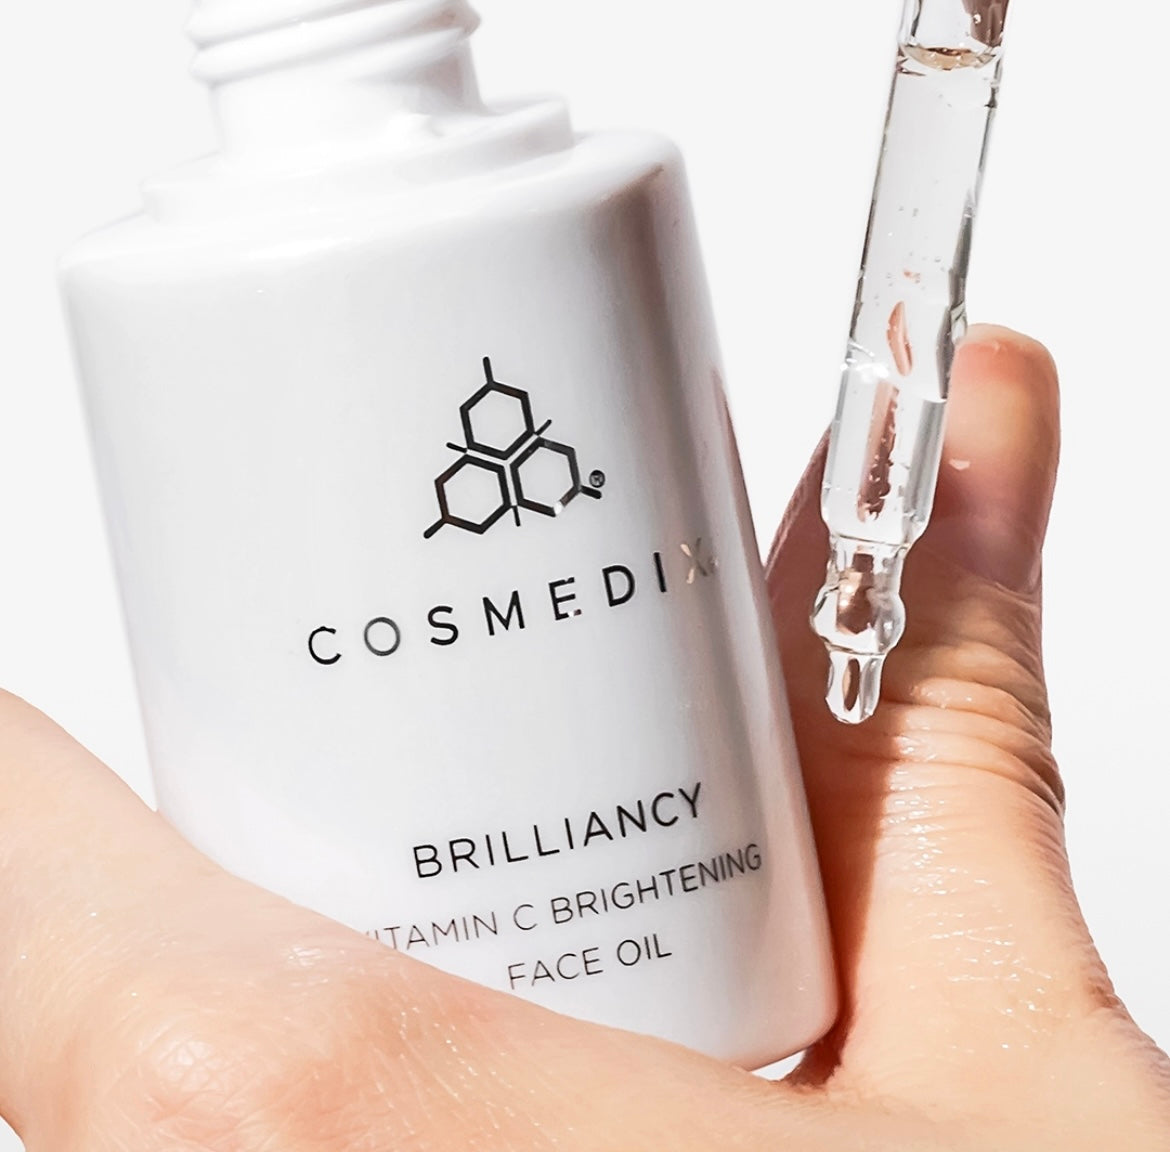 Cosmedix BrillianCy Vitamin C Brightening Face Oil